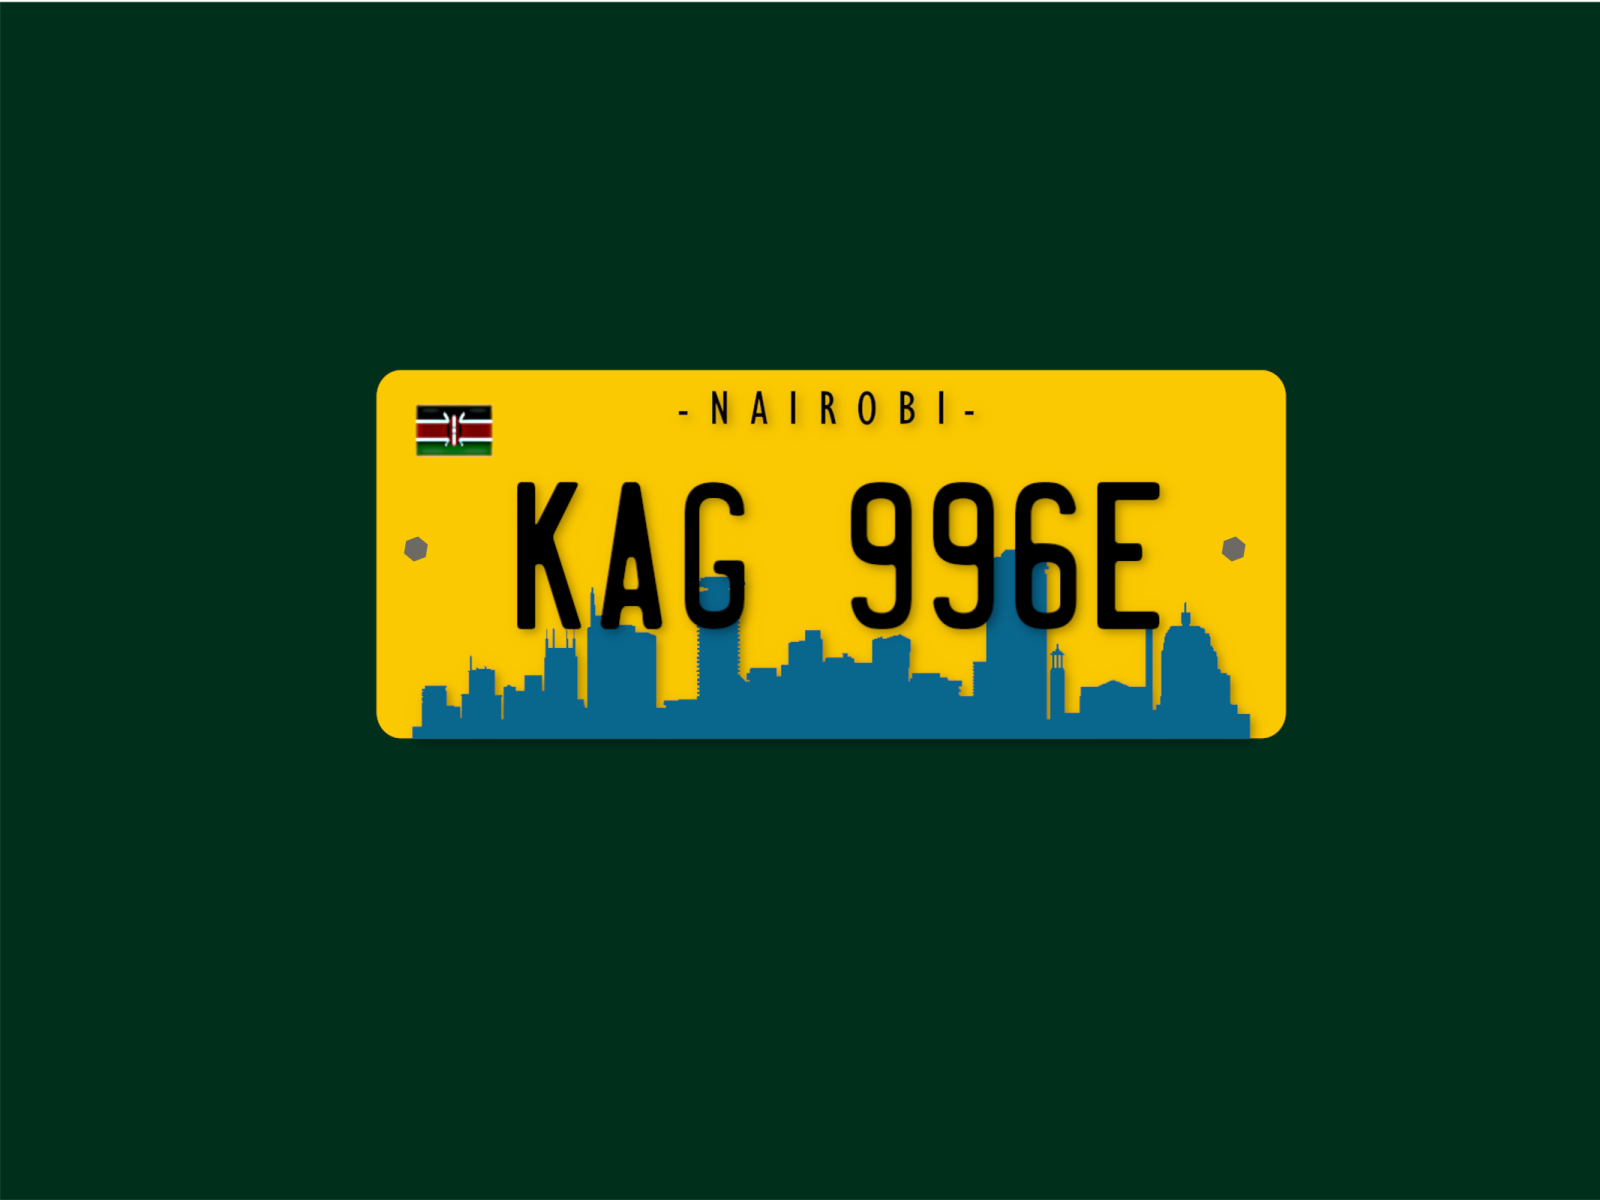 KE number plate